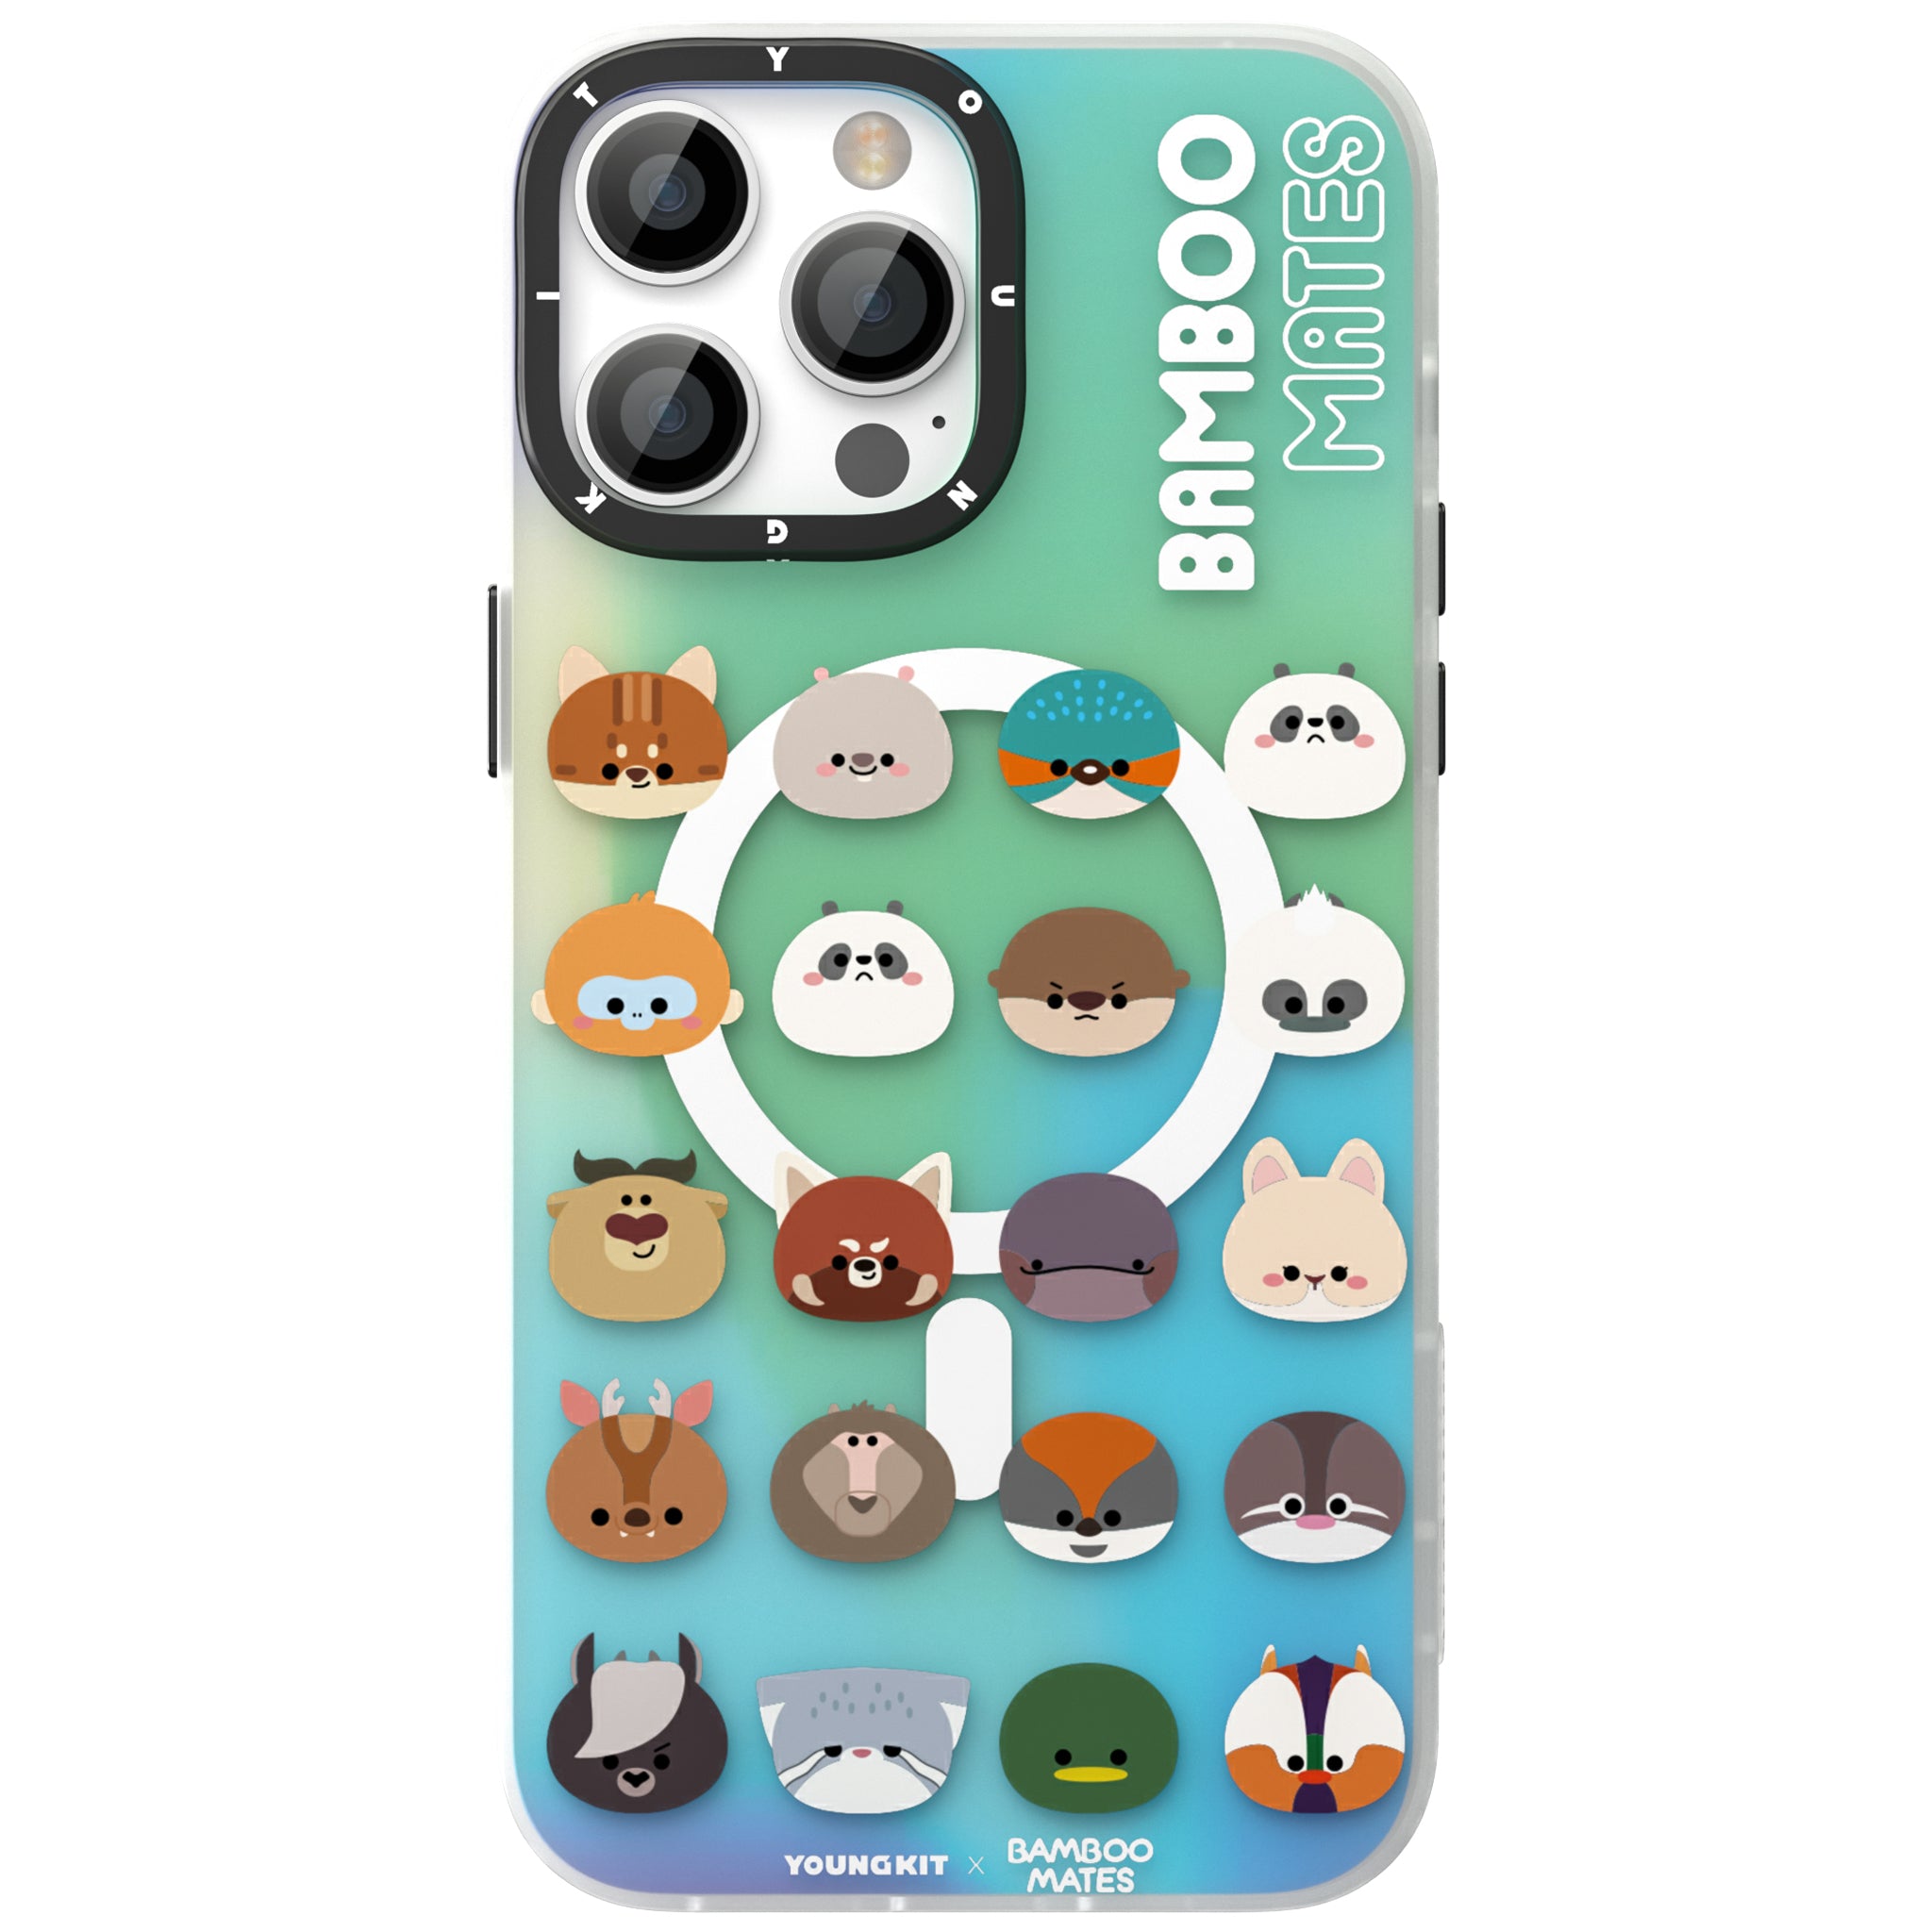 Lovely Panda Magsafe iPhone13 Case